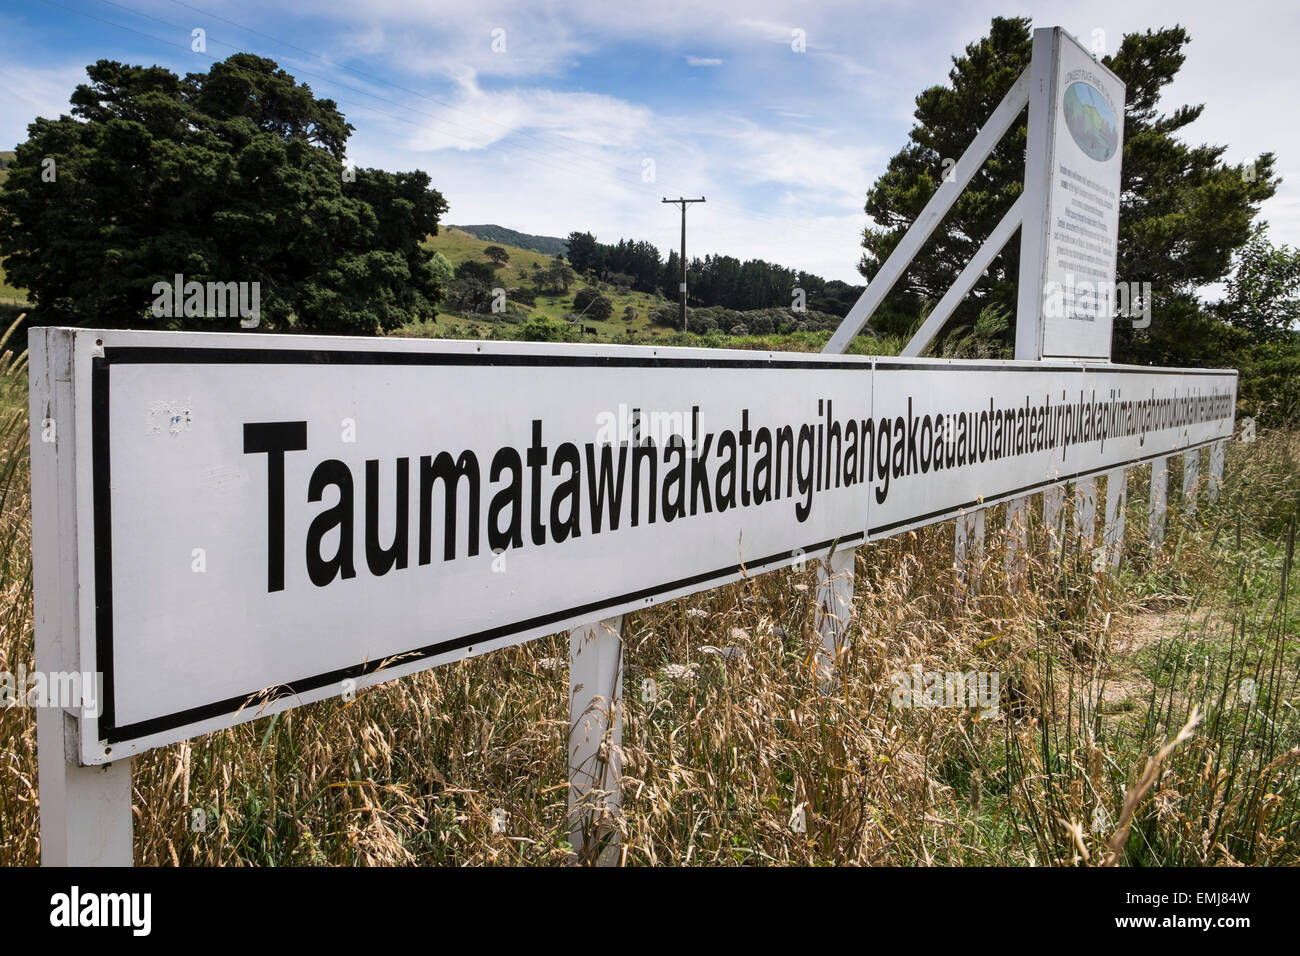 Taumatawhakatangihangakoauauotamateaturipukakapikimaungahoronukupokaiwhenuakitanatahu nom de lieu le plus long en Nouvelle Zélande Banque D'Images